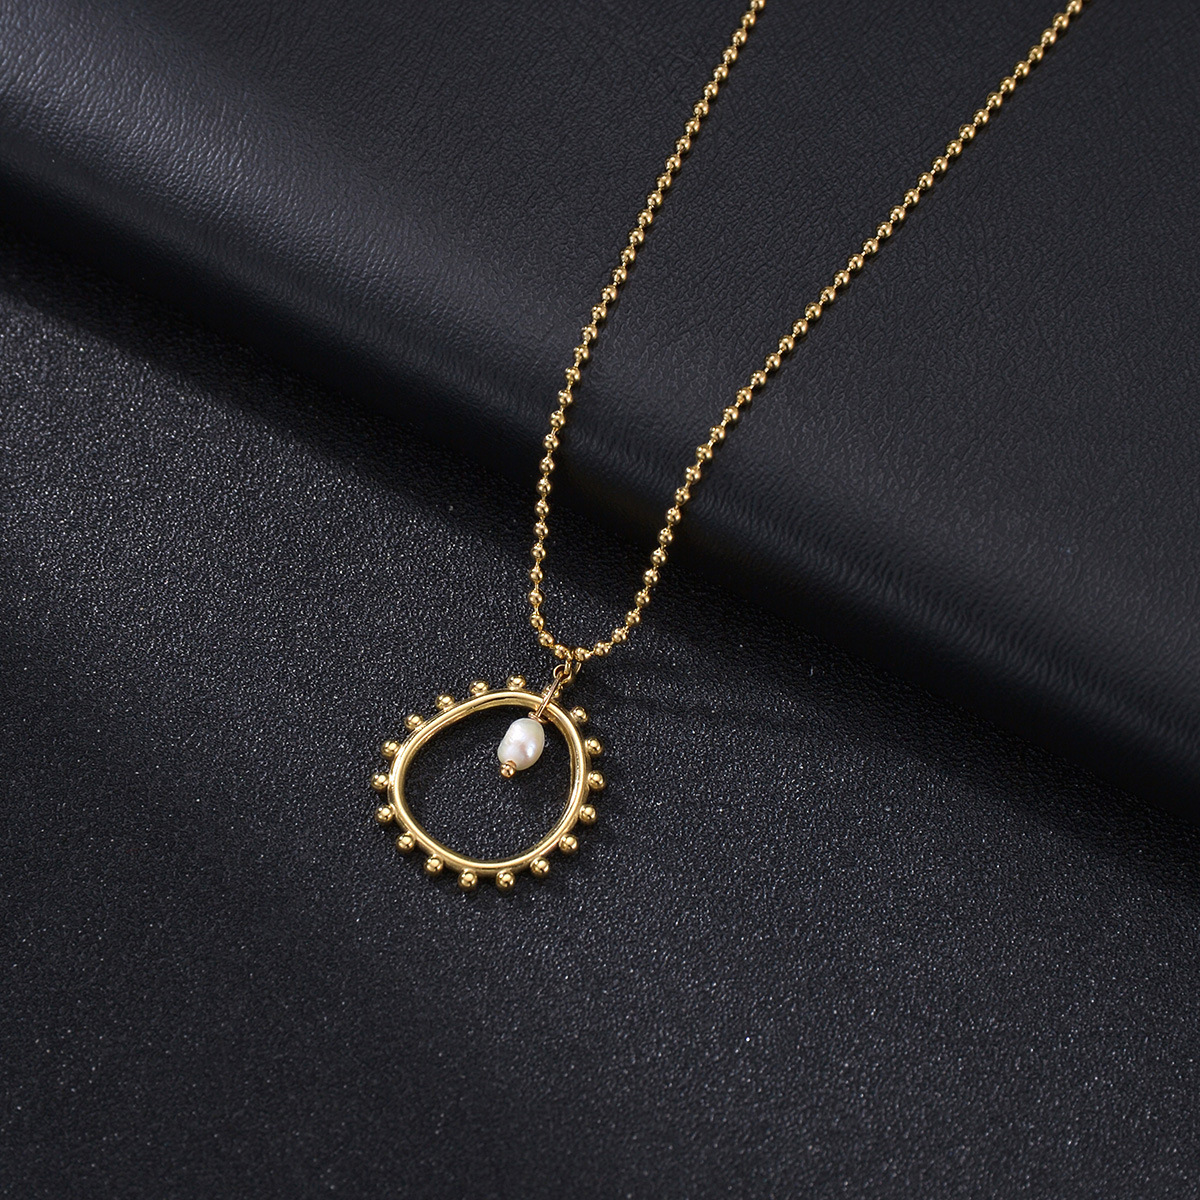 1:Gold bead chain shape